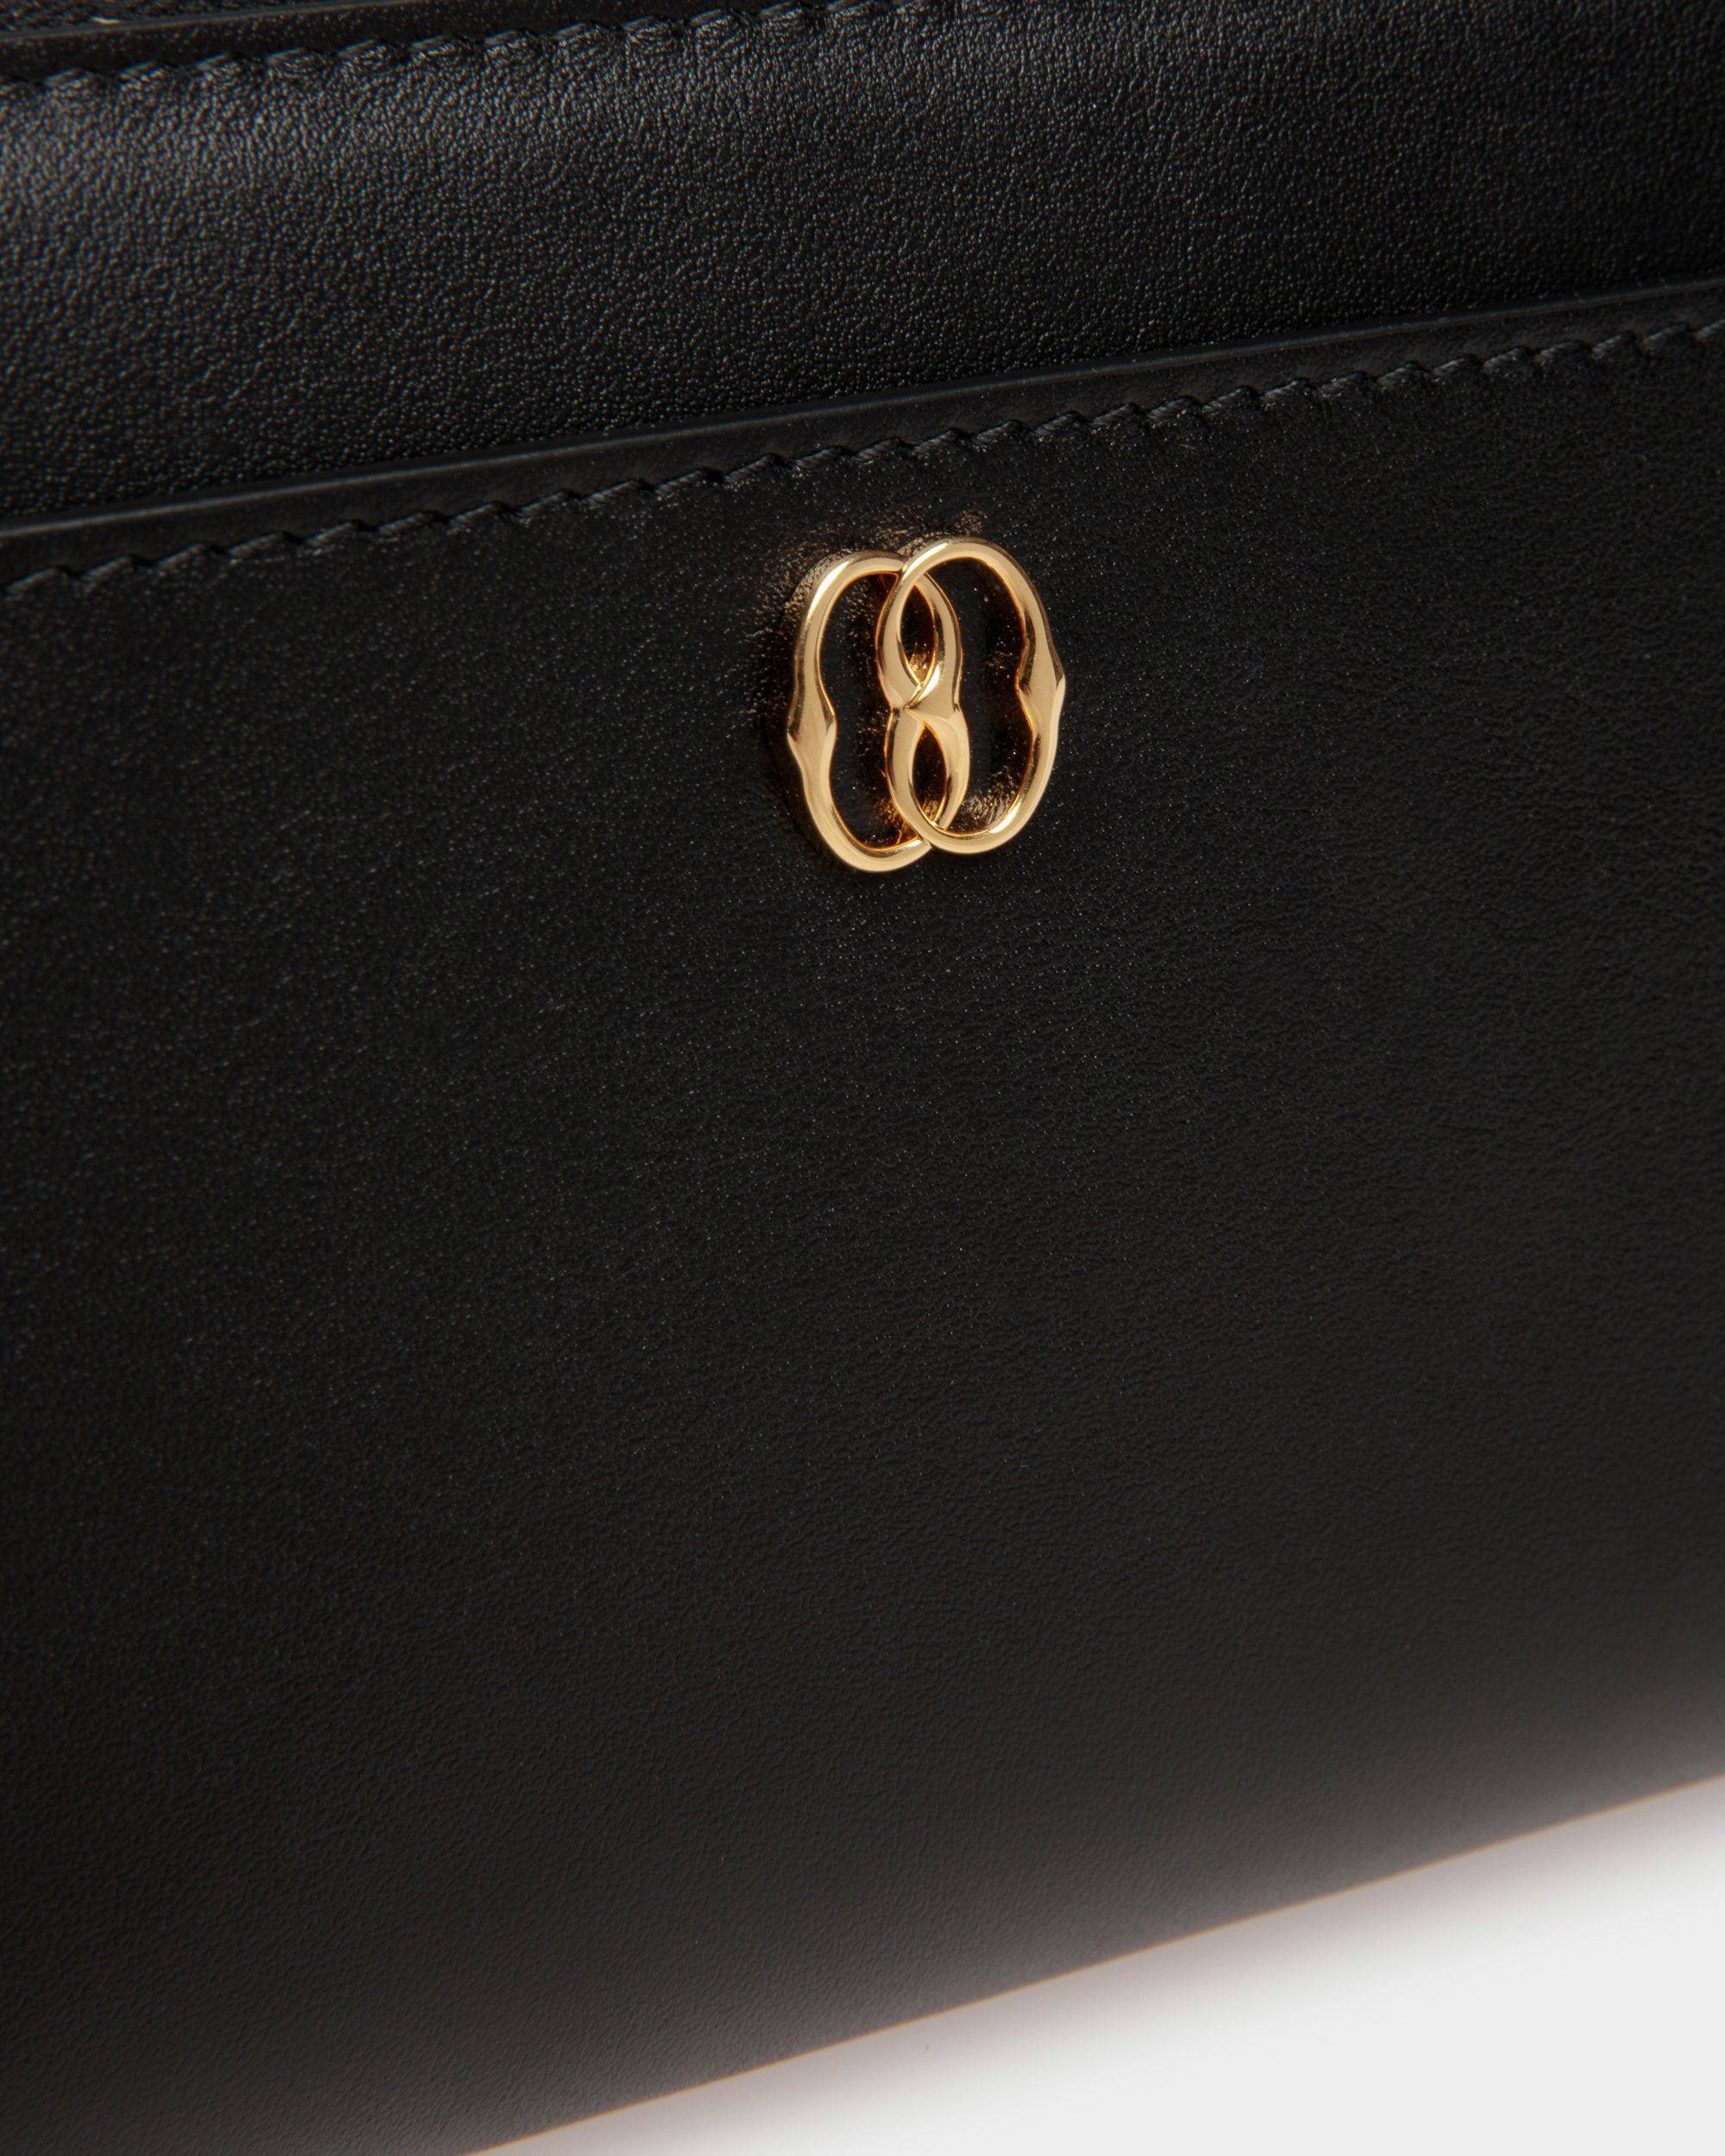 Emblem | Women's Long Wallet in Black Leather | Bally | Still Life Detail